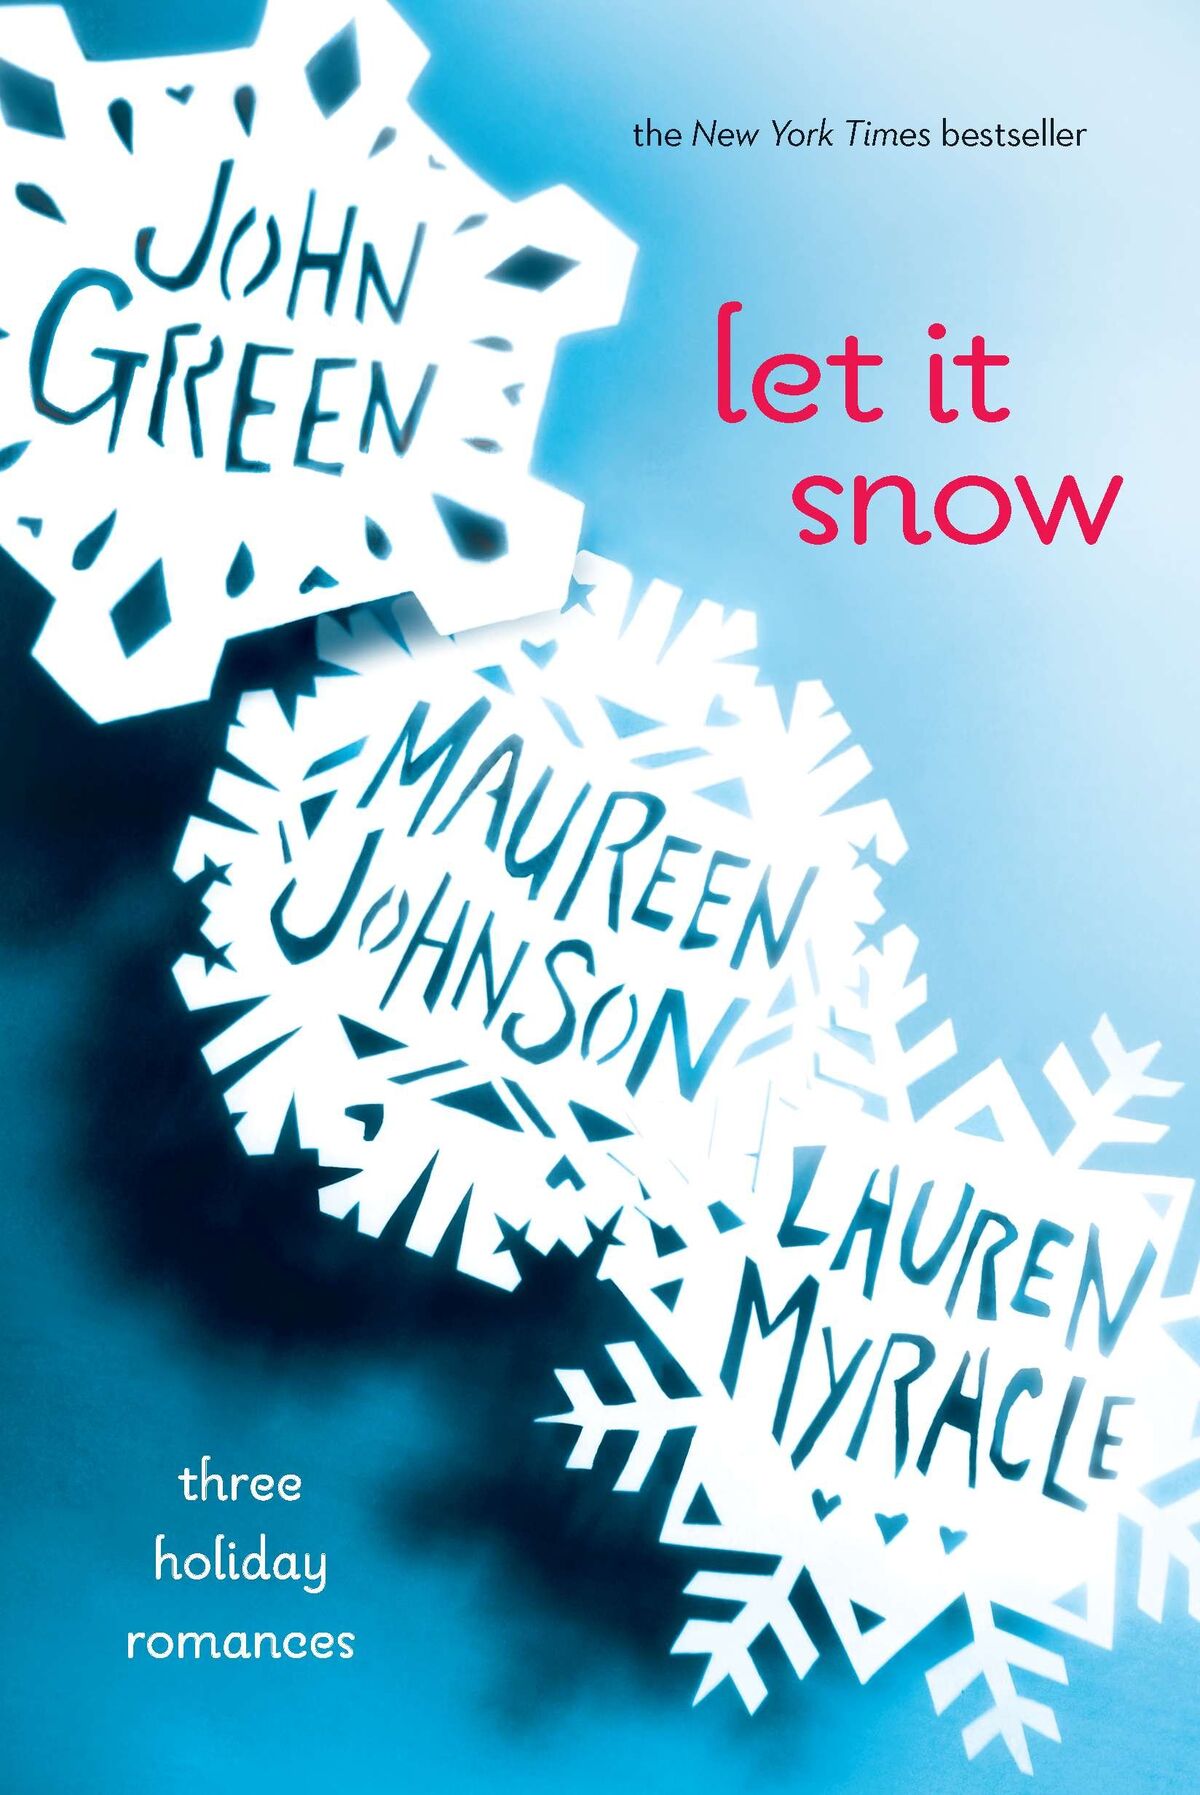 Let It Snow, John Green Wiki